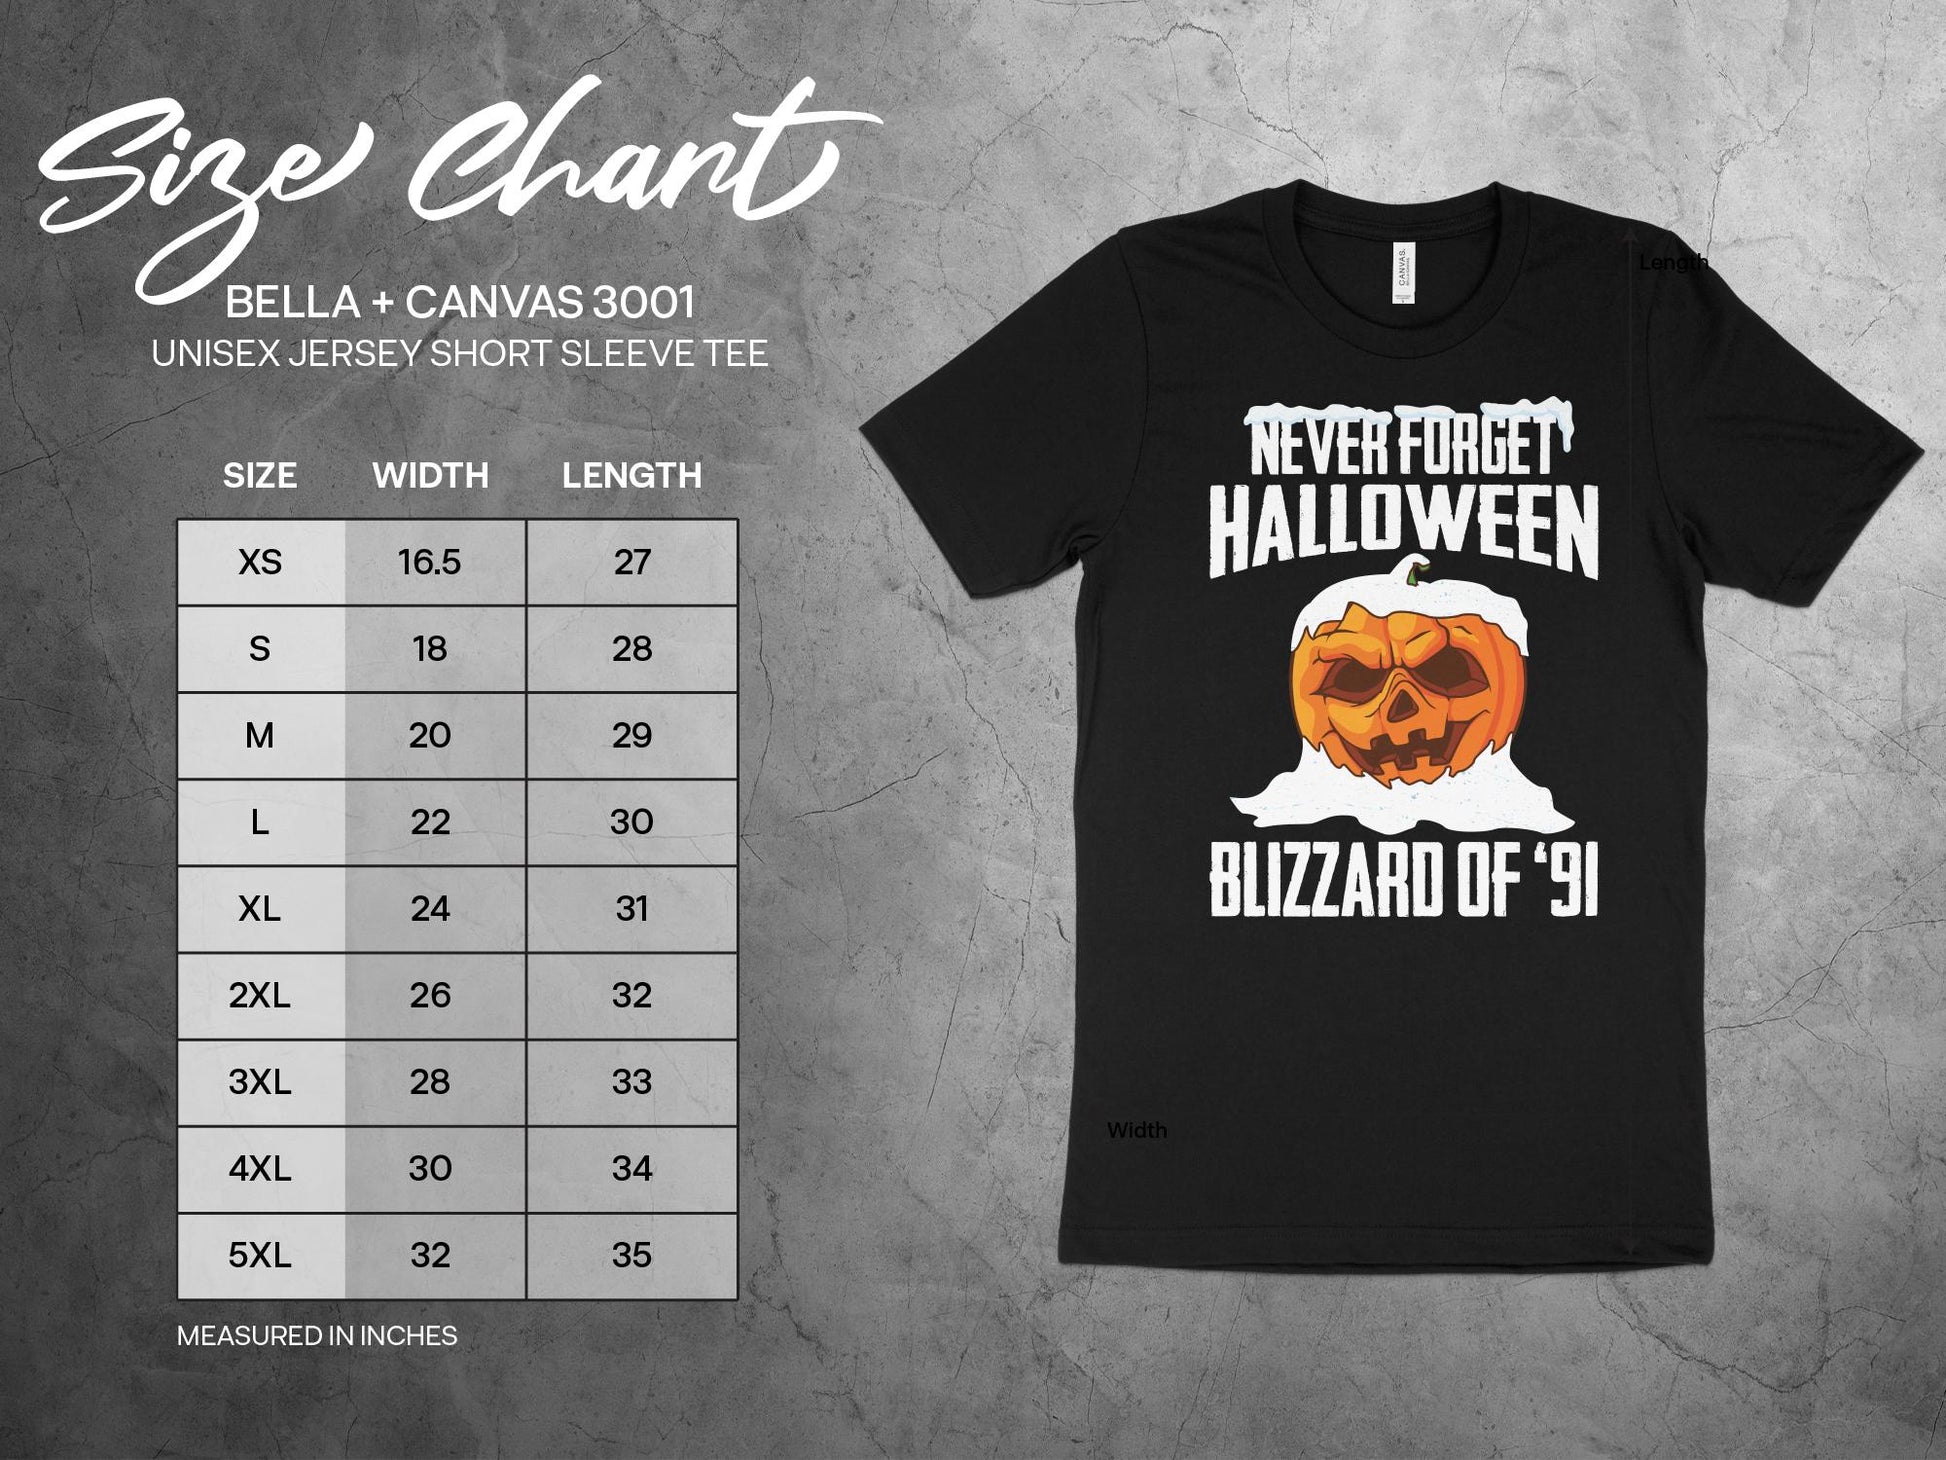 Minnesota Blizzard Halloween 1991 Shirt, sizing chart